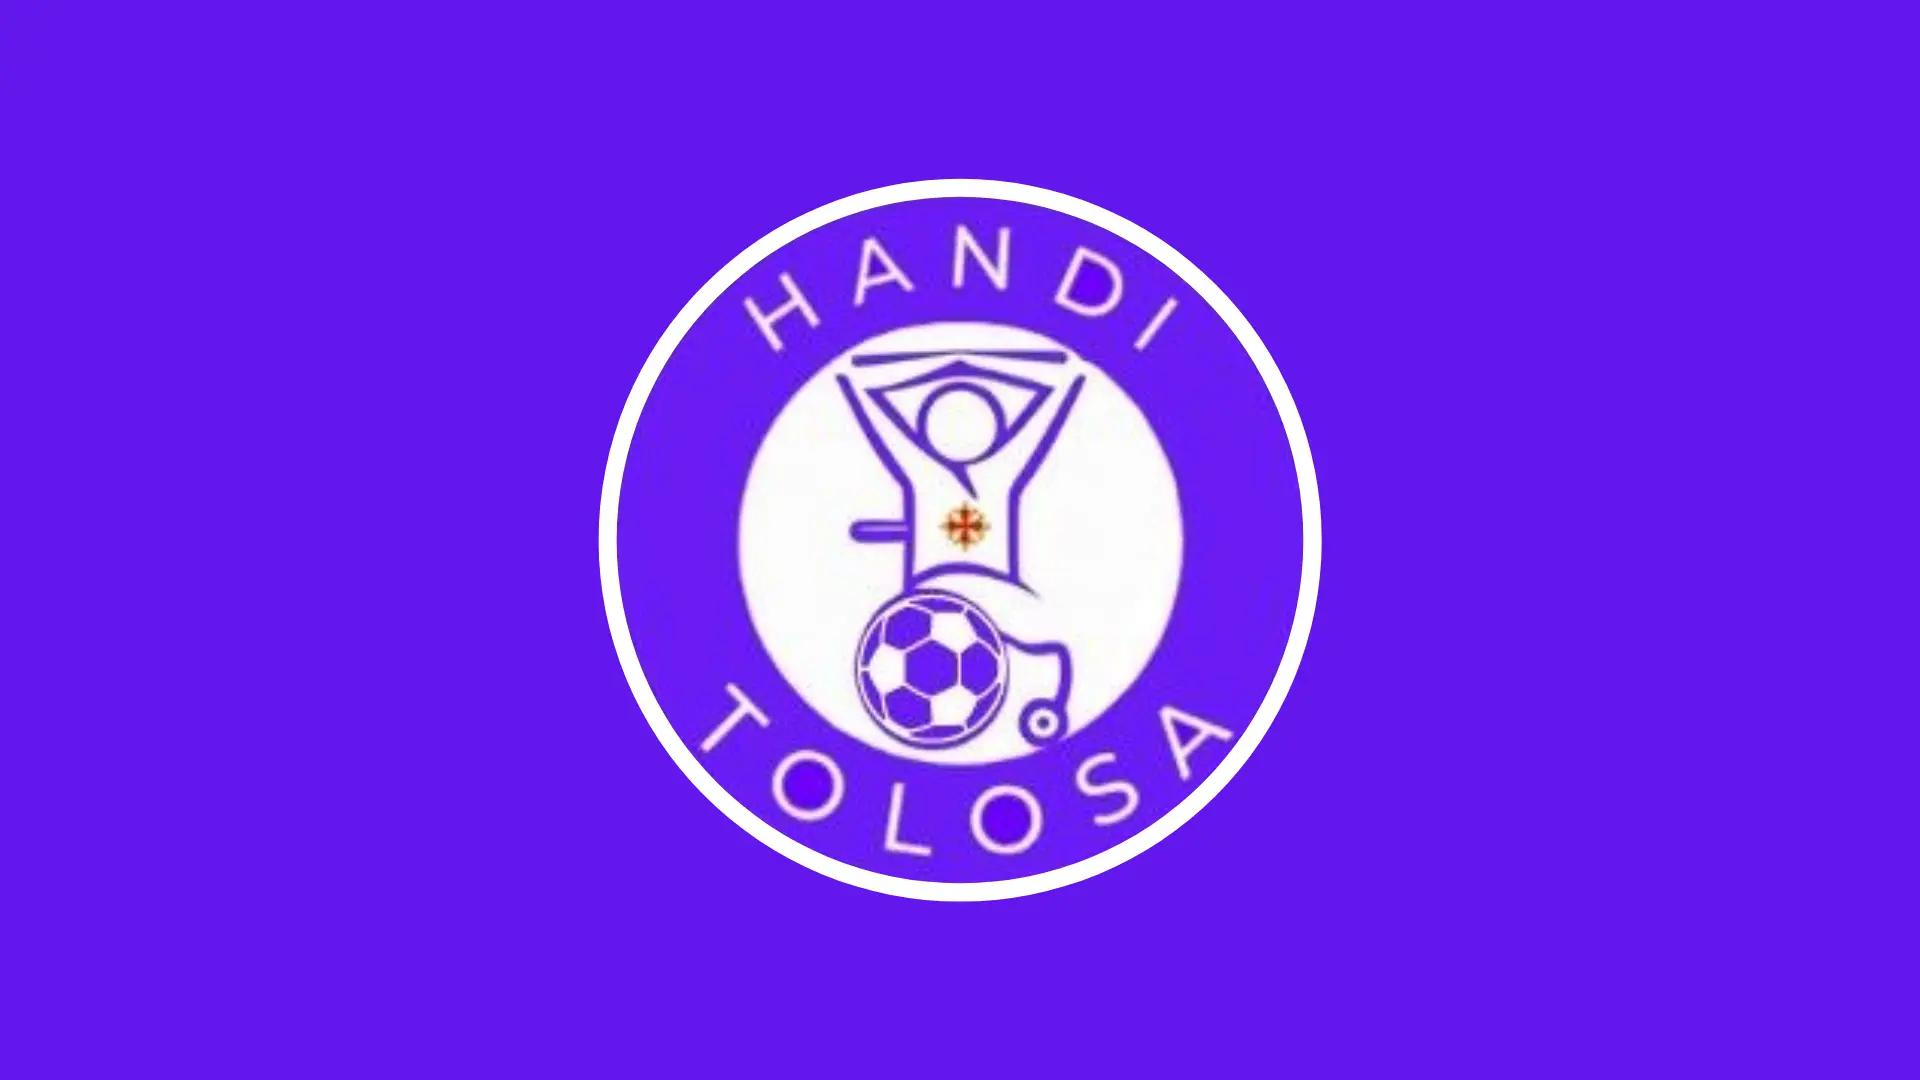 Logo Handi Tolosa